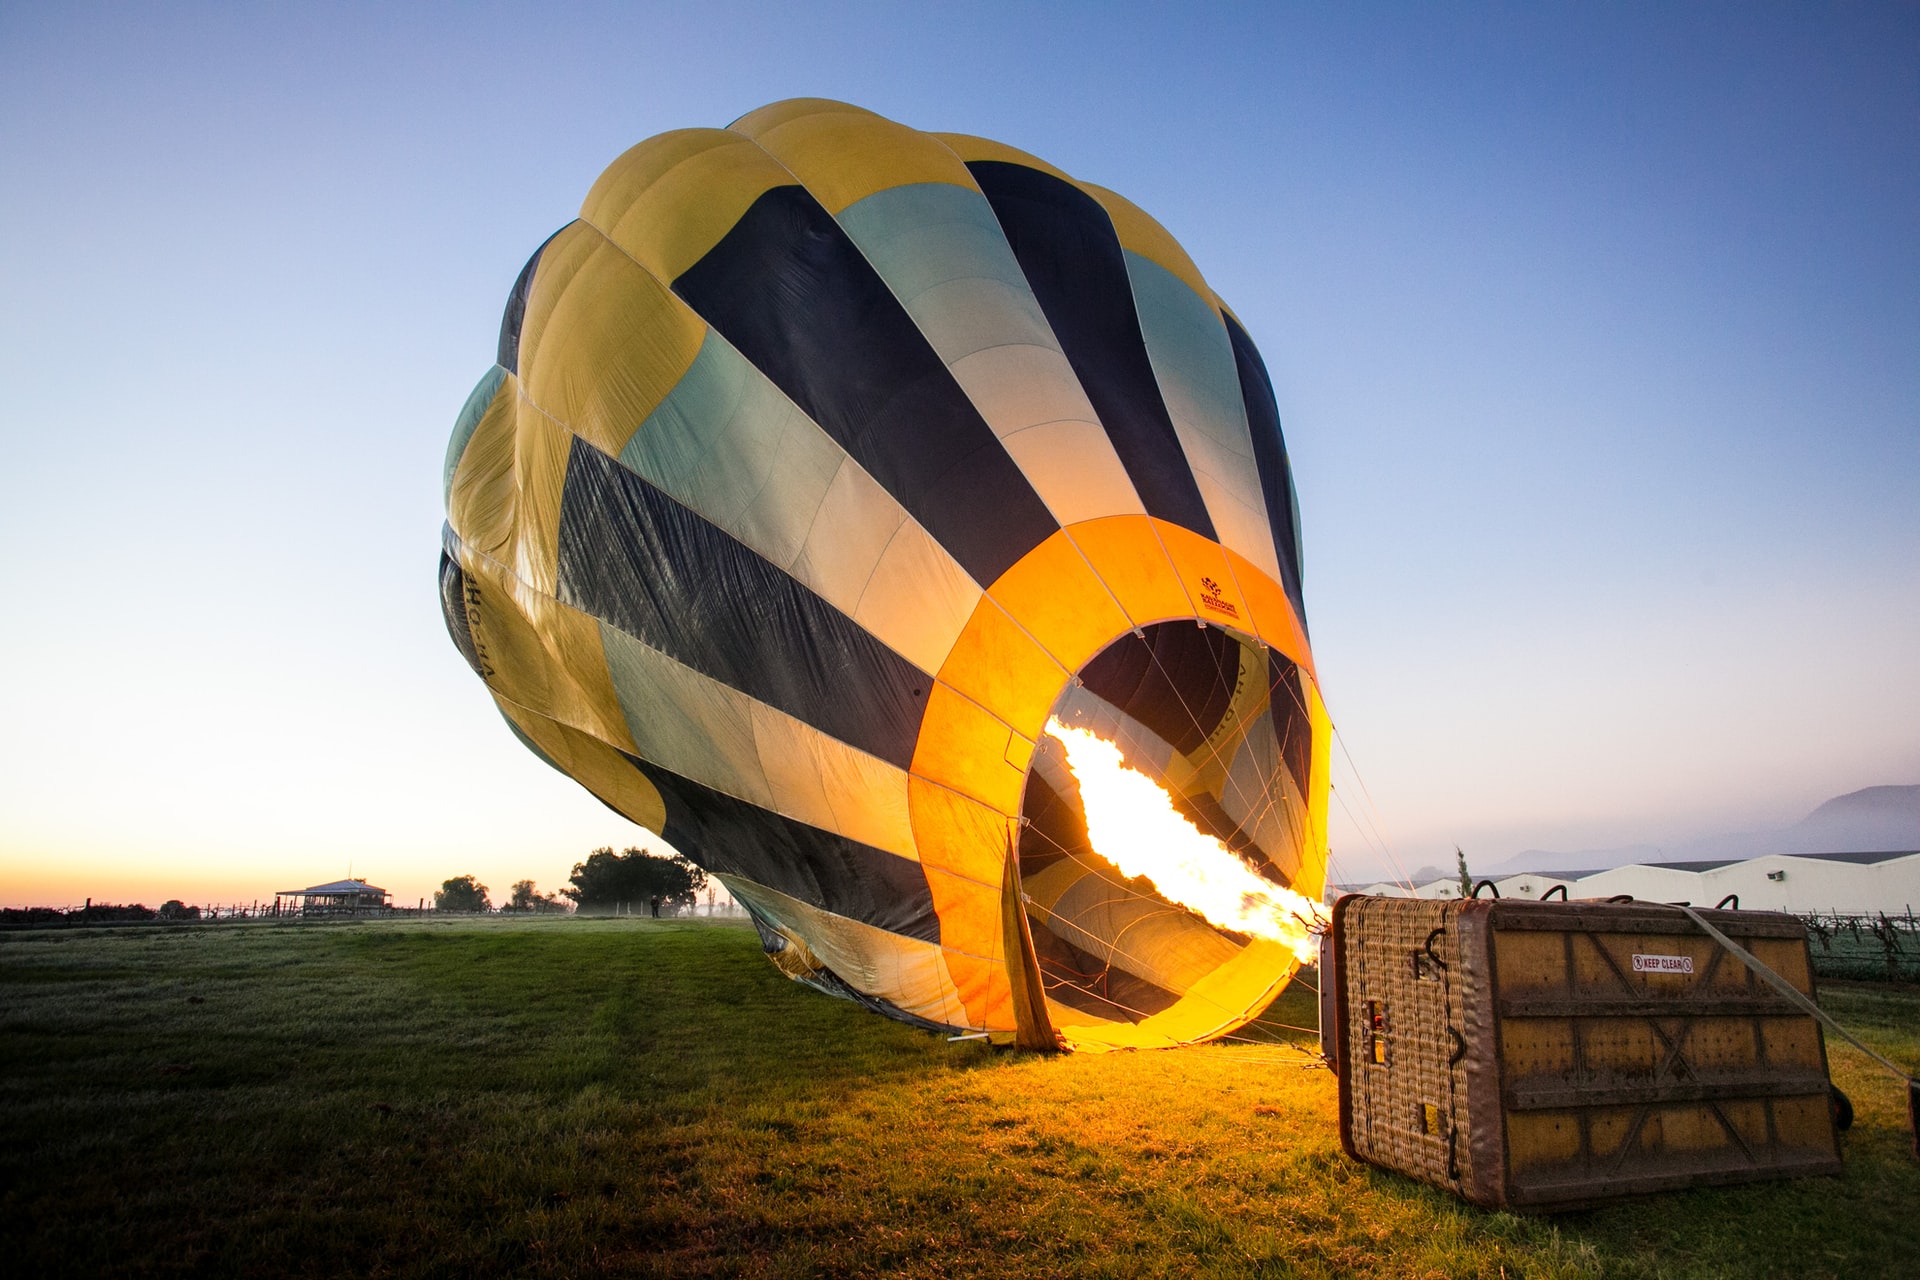 A hot air balloon inflating